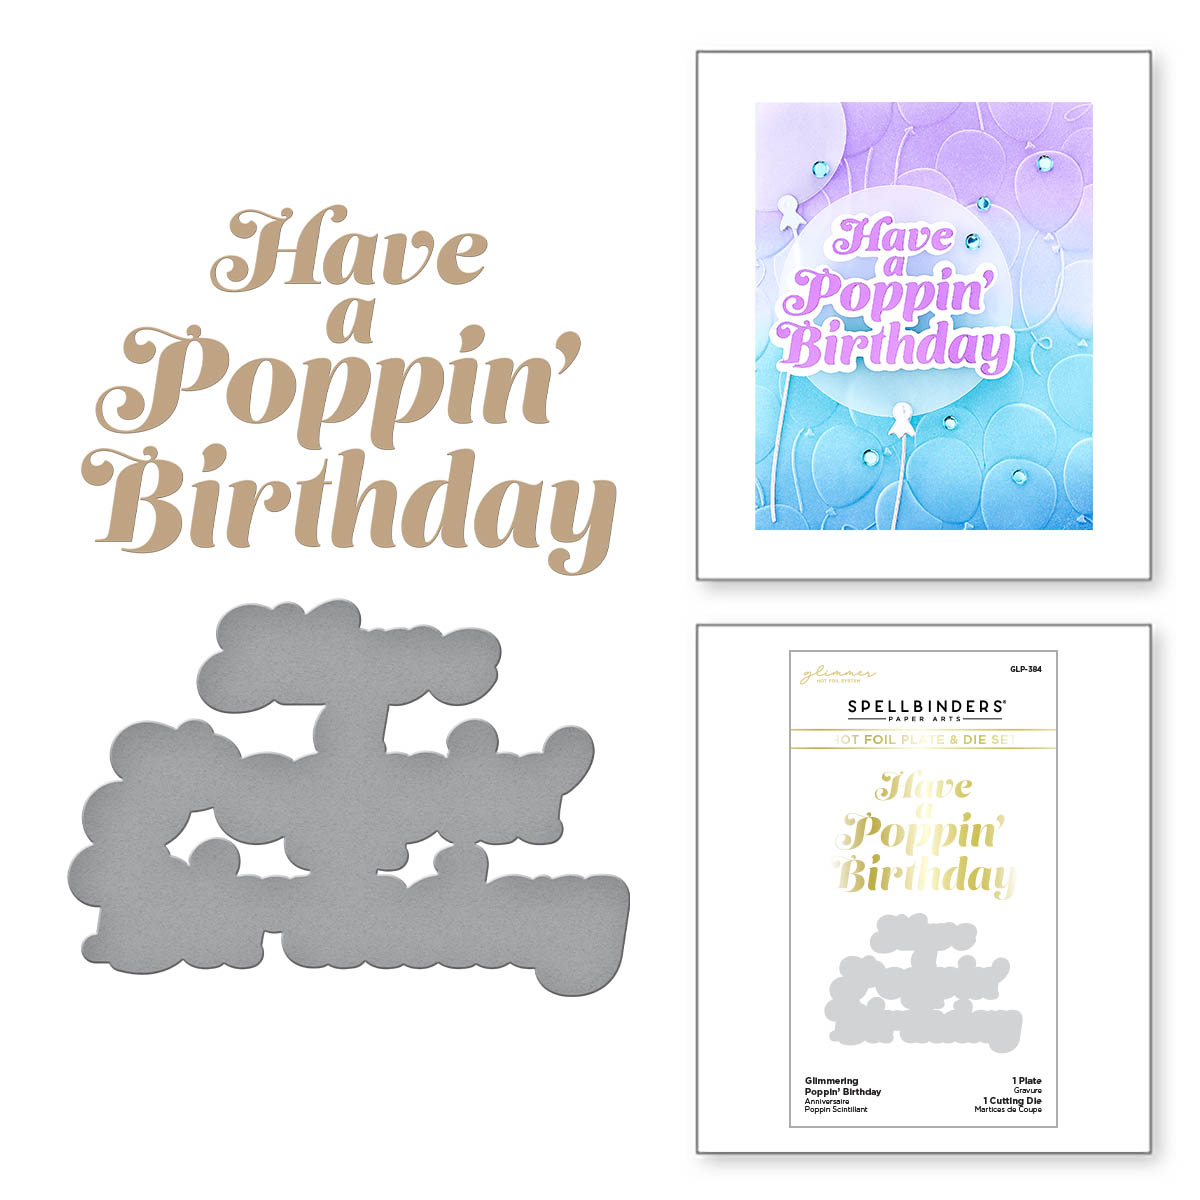 Spellbinders Foil Plate Glimmering Poppin’ Birthday